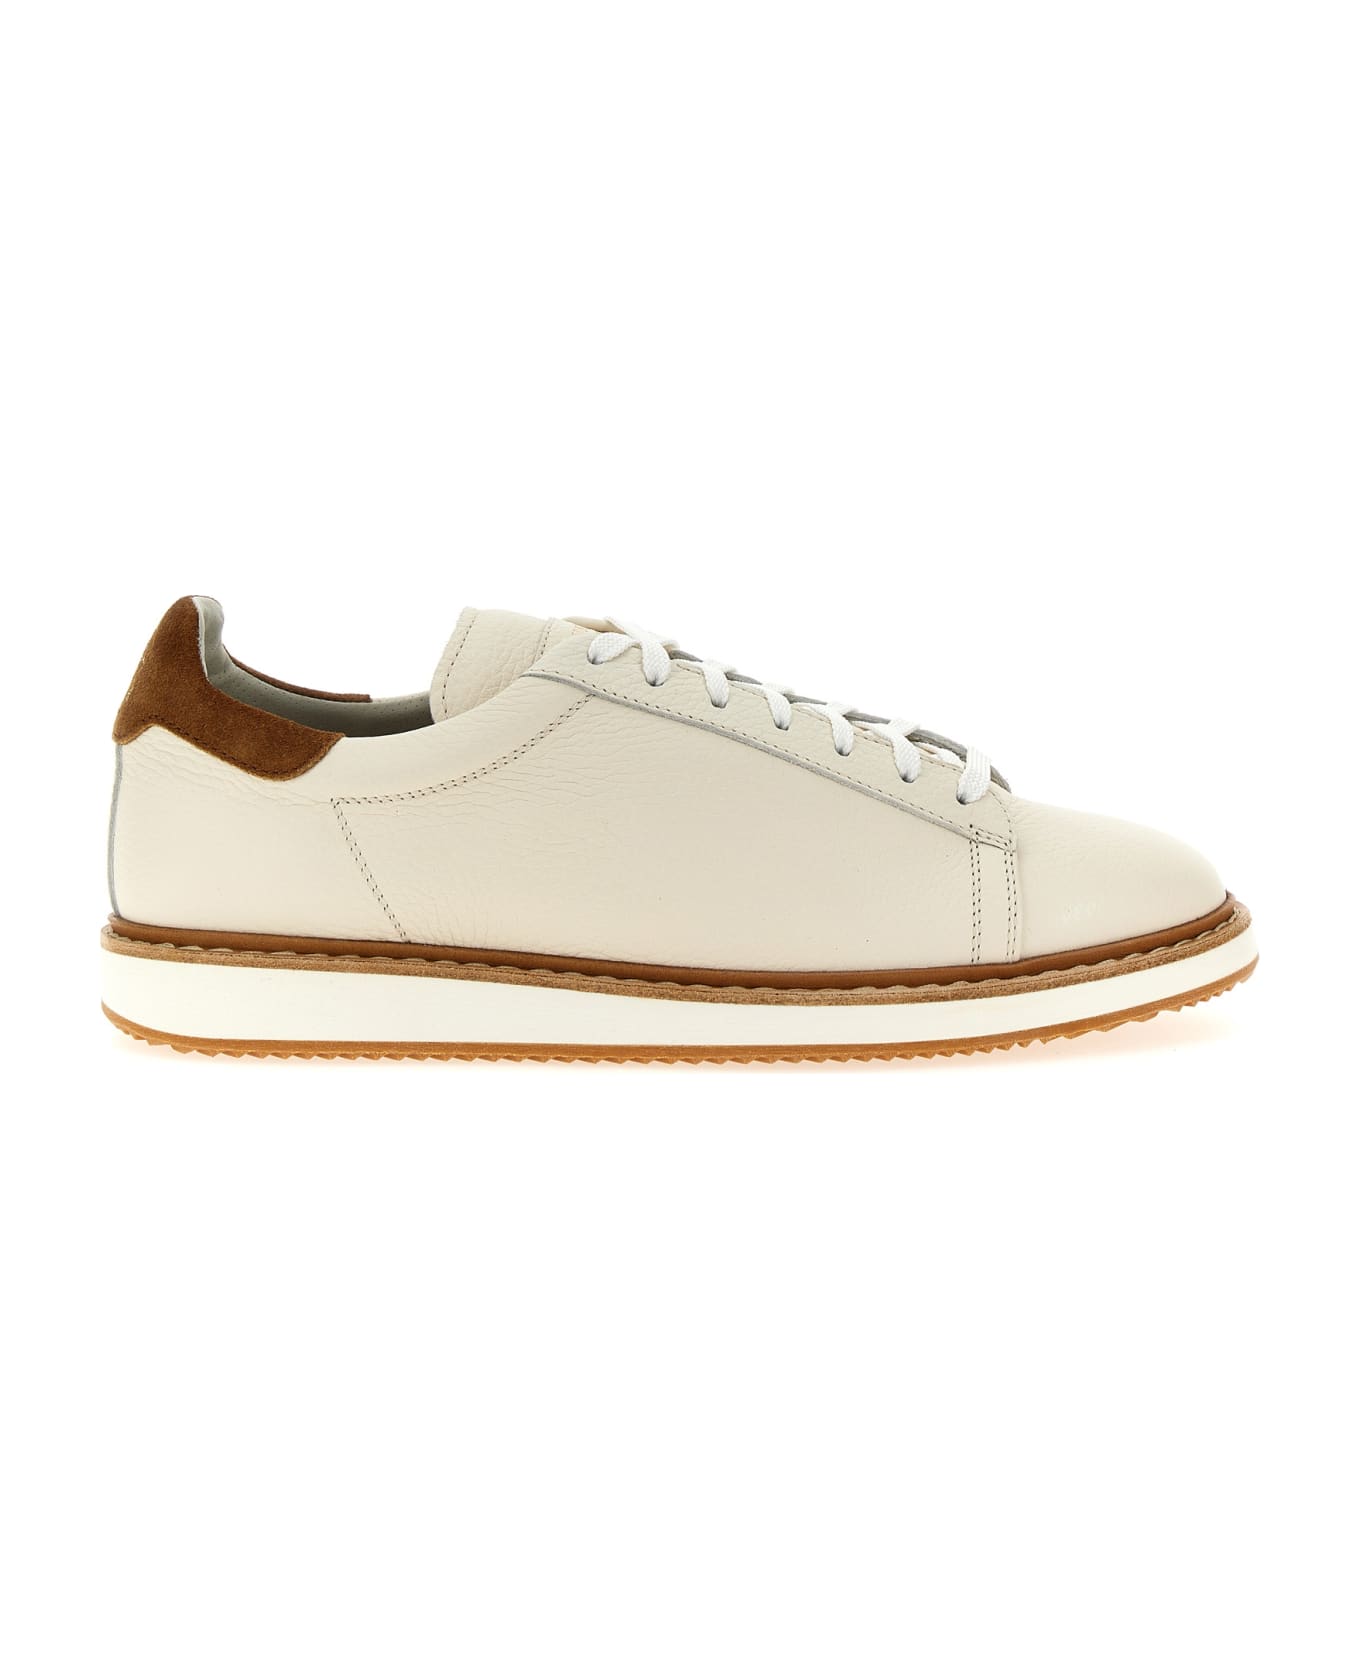 Brunello Cucinelli Suede Runner Sneaker Shoe With Wool Inserts - White スニーカー